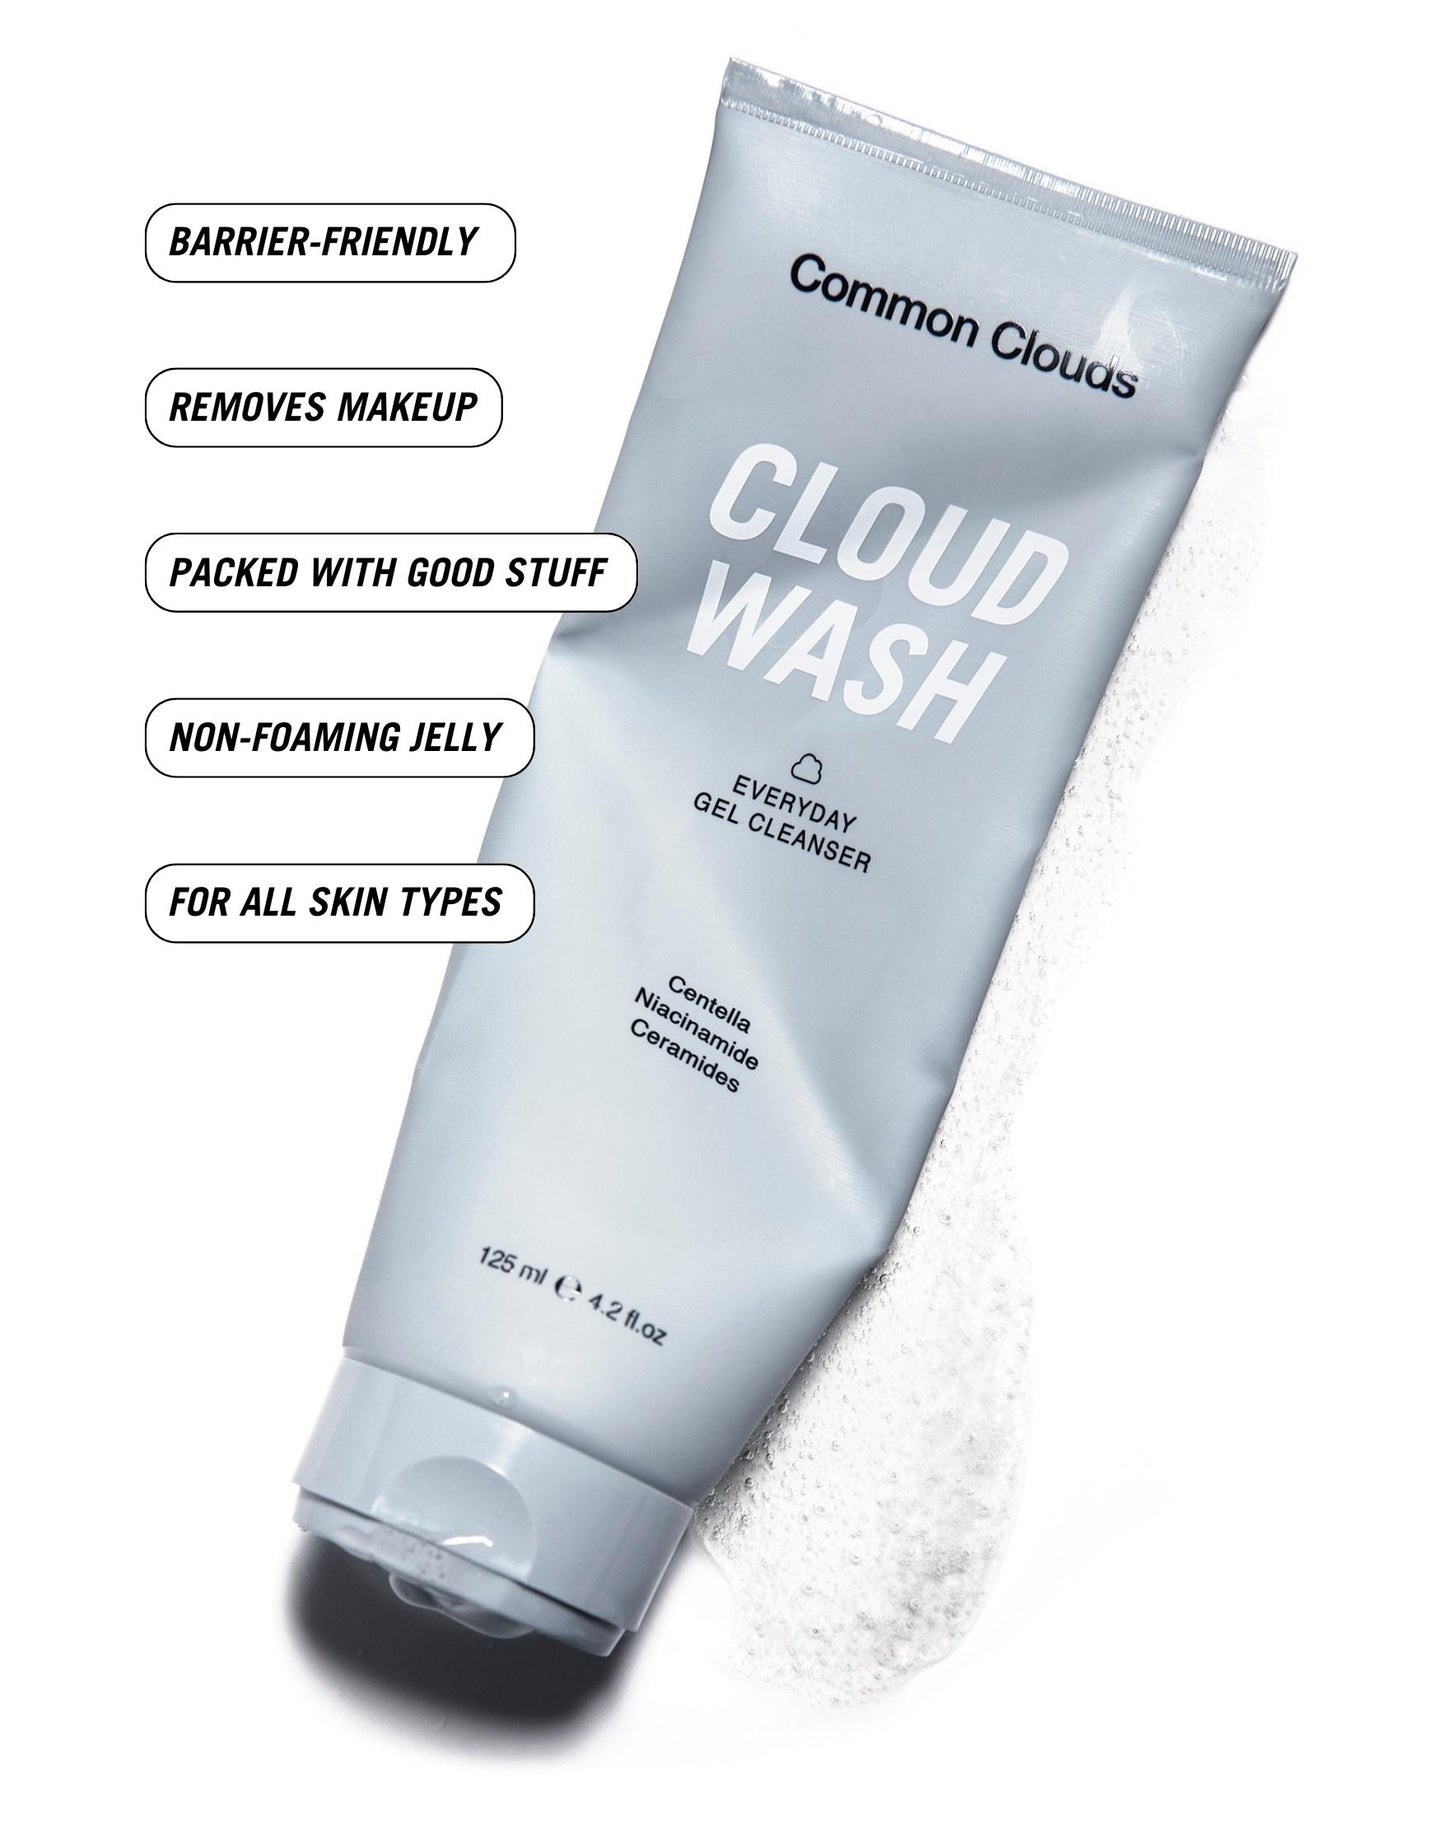 Cloud Wash